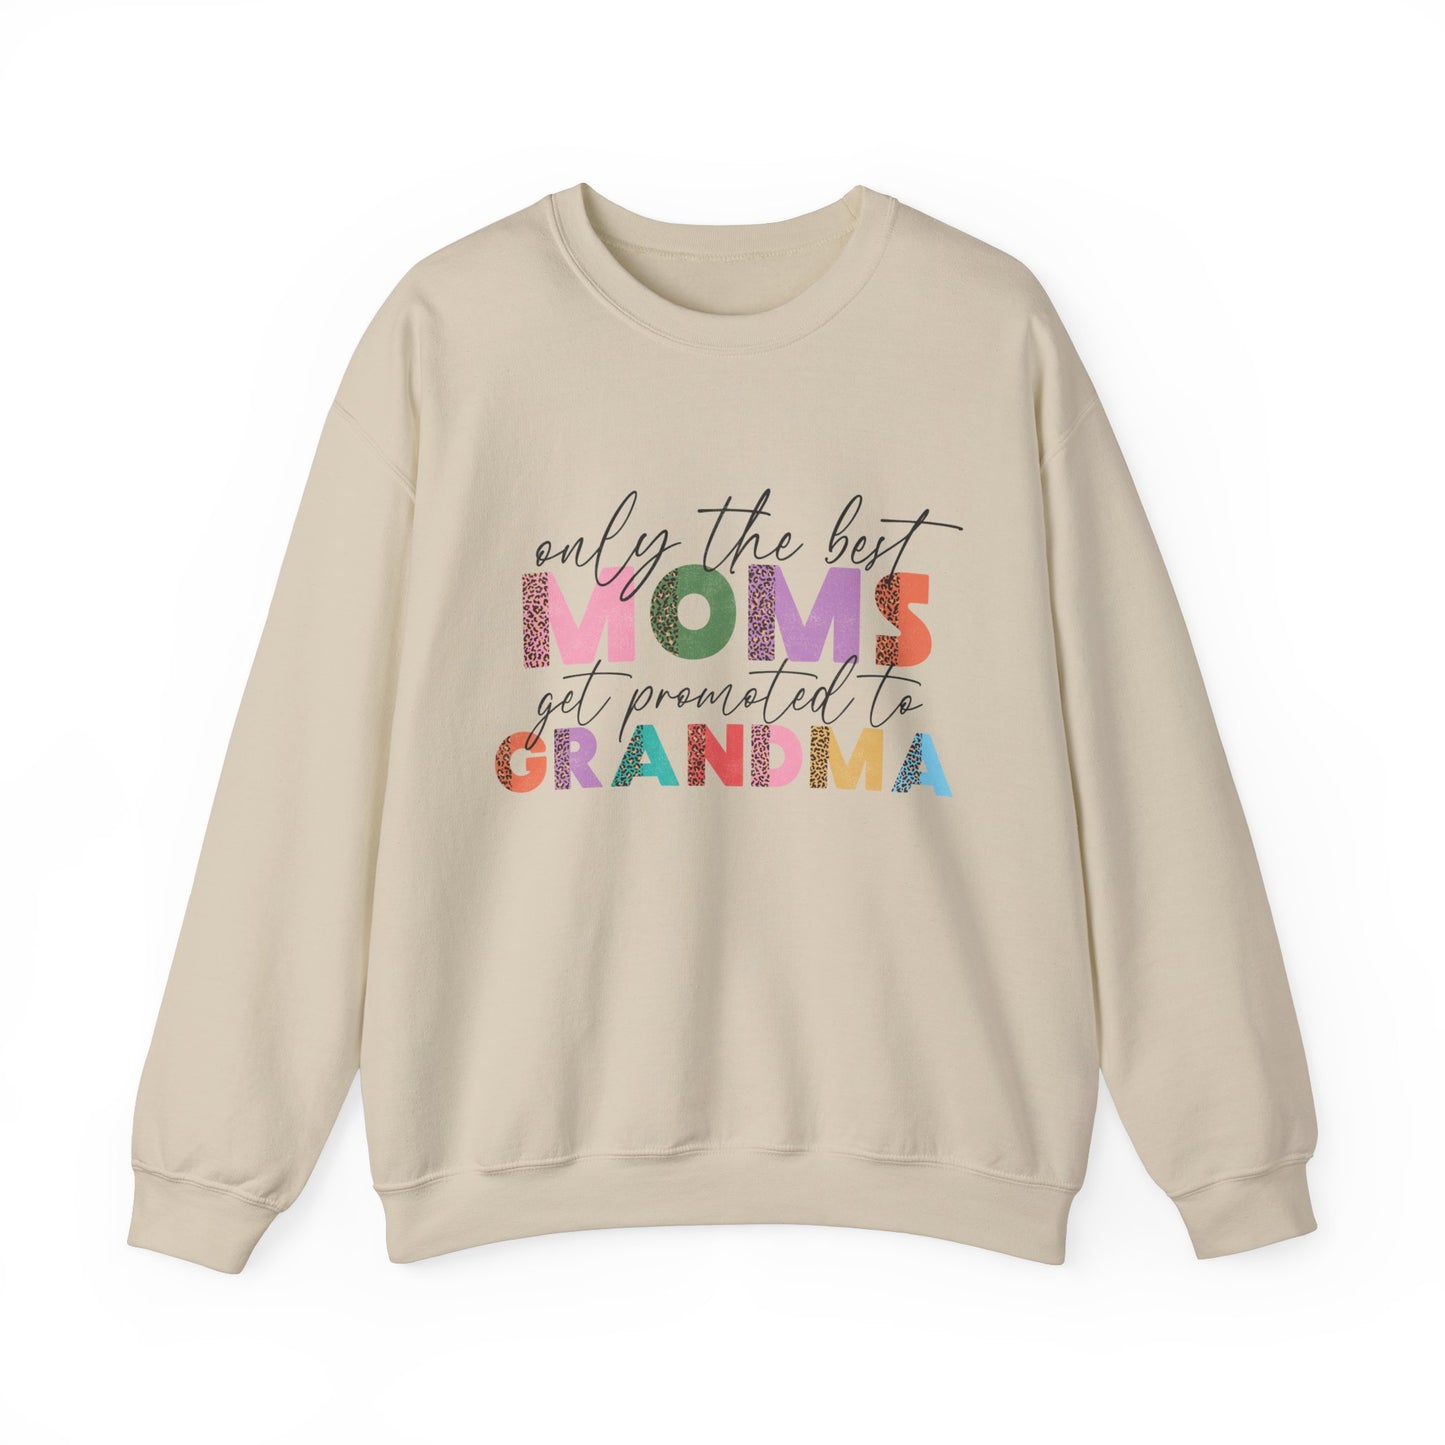 Promoted to Grandma Women's Sweatshirt